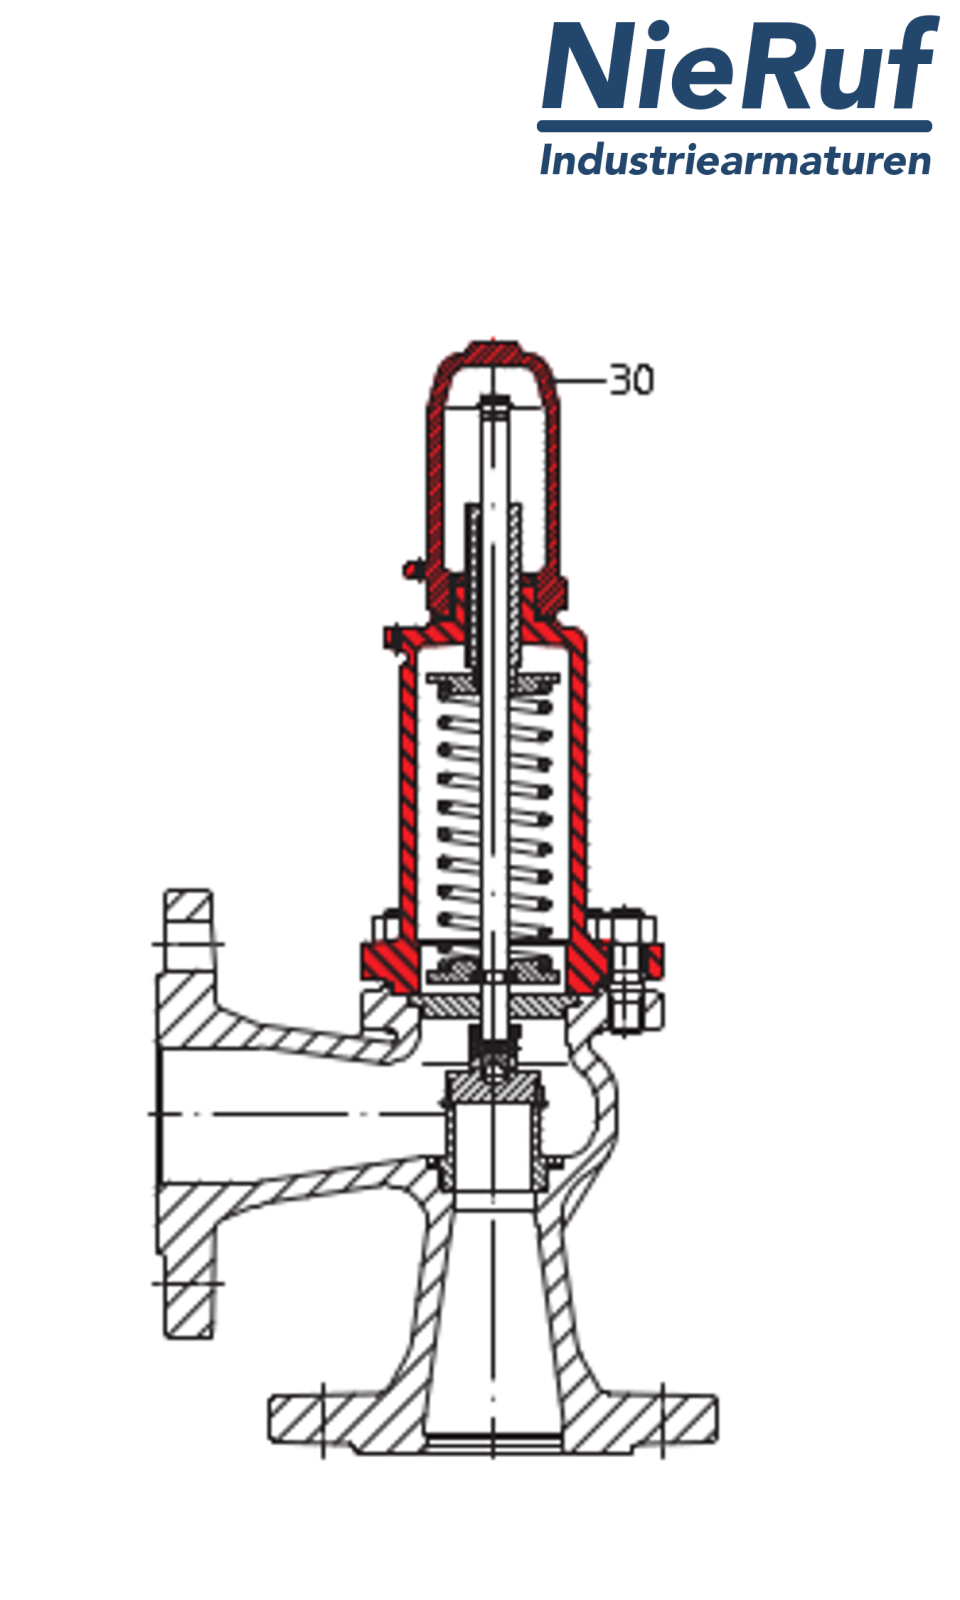 flange-safety valve DN25/DN25 SF0101, cast iron EN-JL1040 FPM, without lever